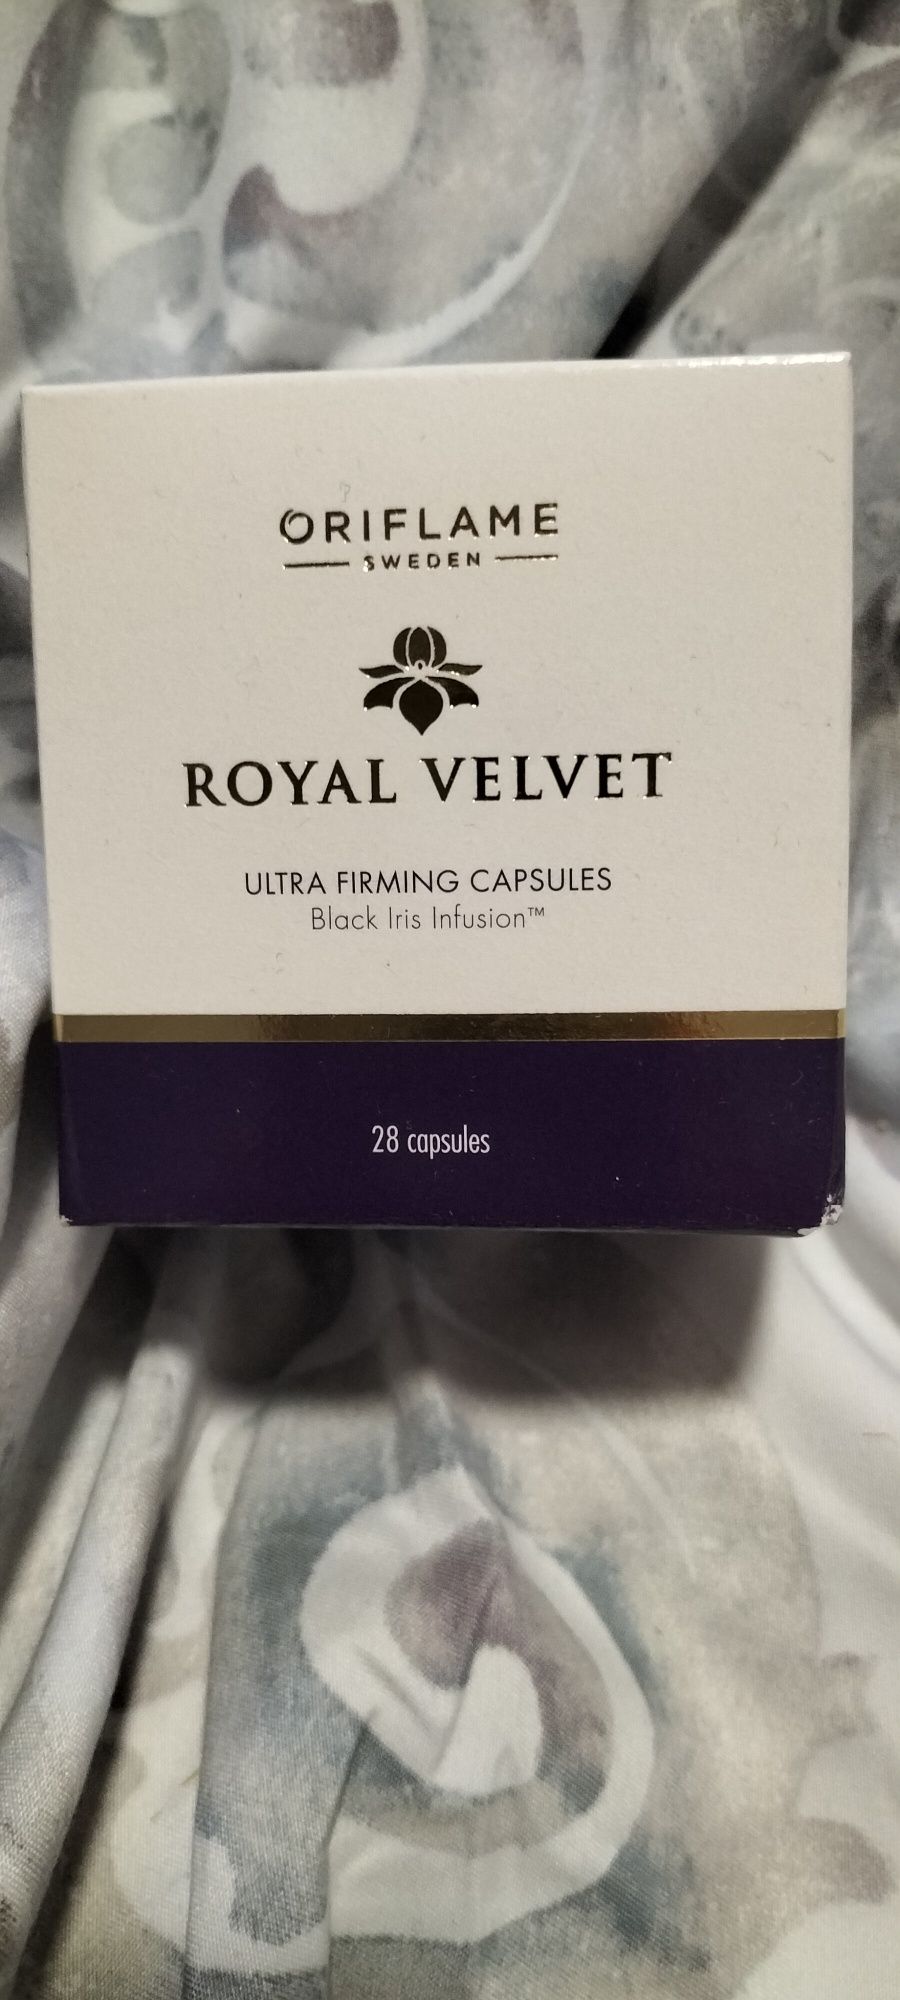 Serum w kapsułkach do twarzy, 28 szt Royal Velvet Oriflame